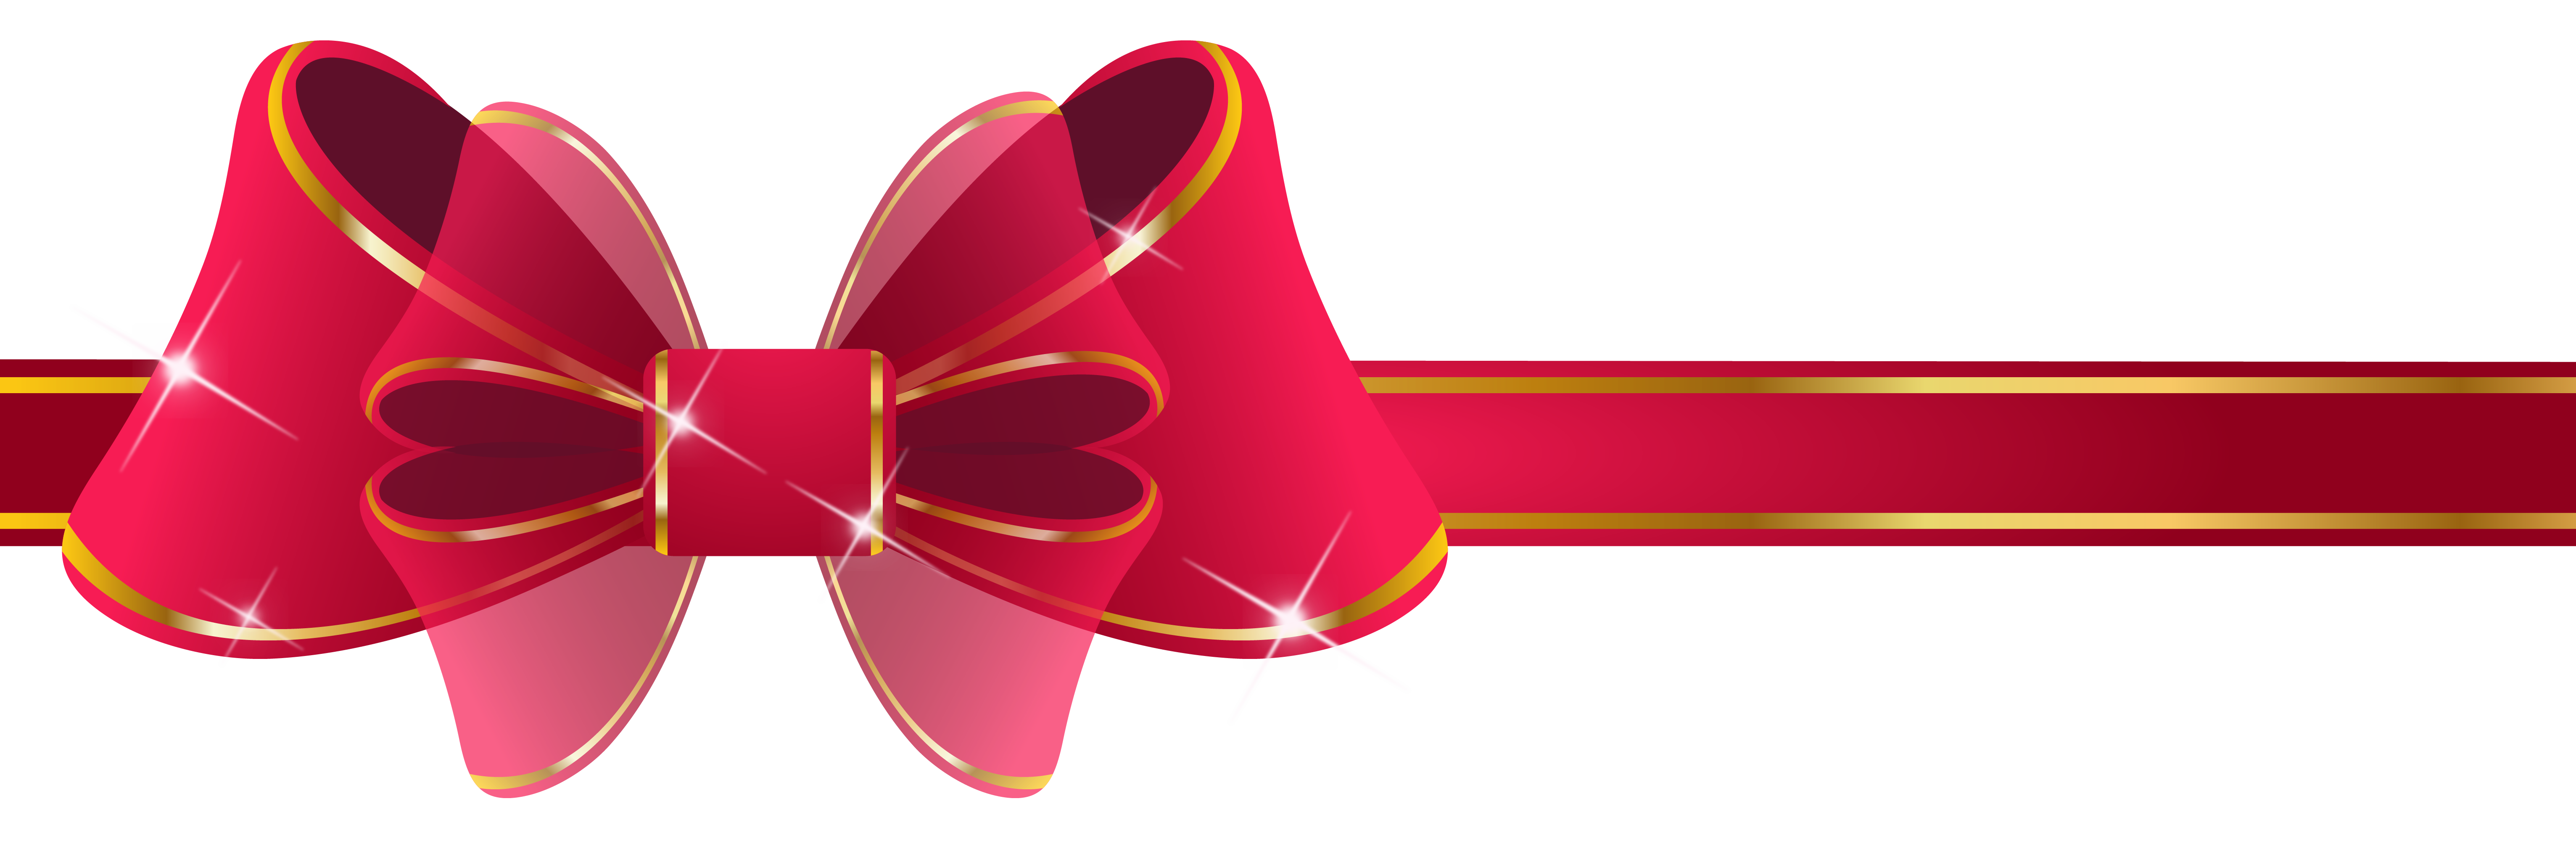 clipart banner pink ribbon